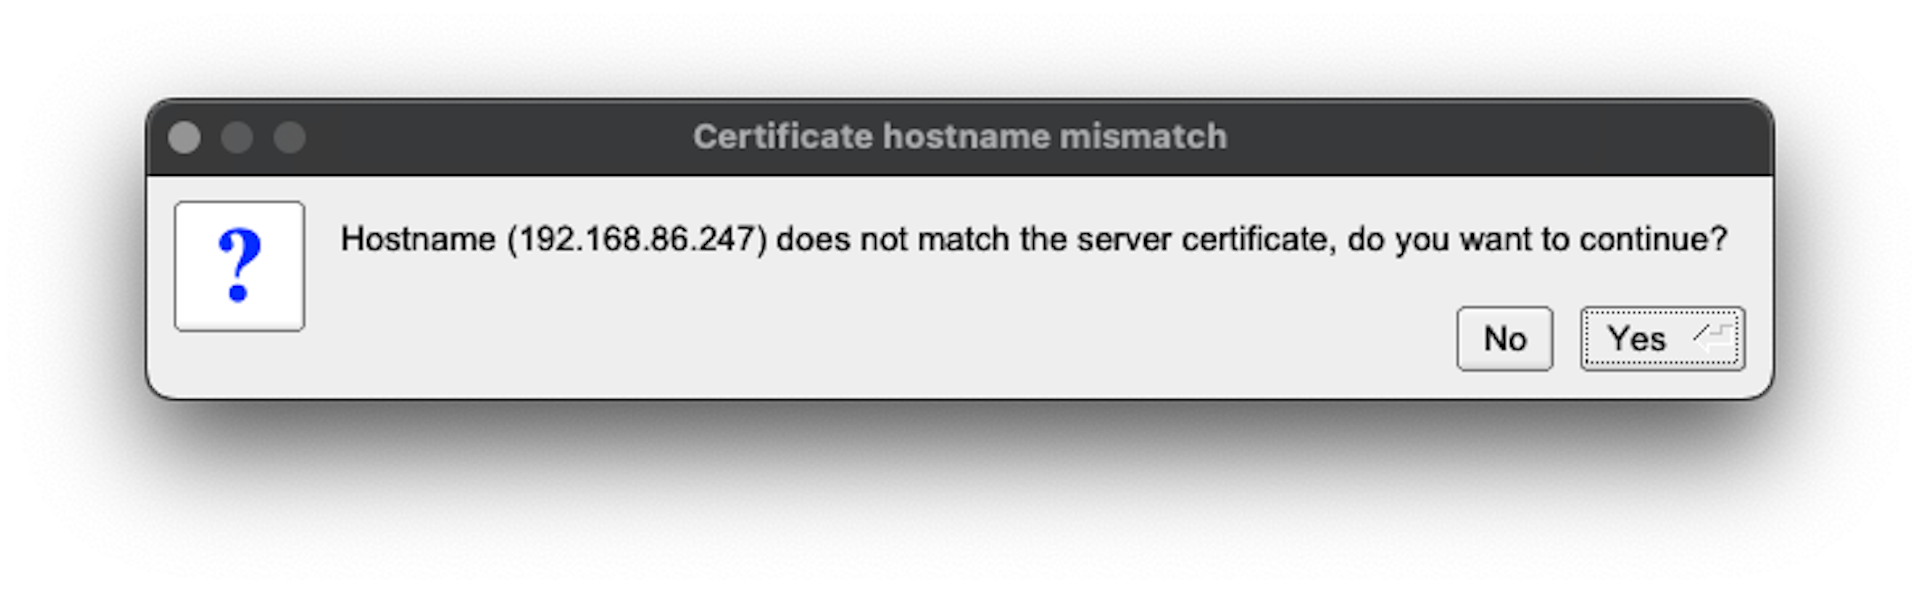 Overriding a server certificate mismatch in TigerVNC